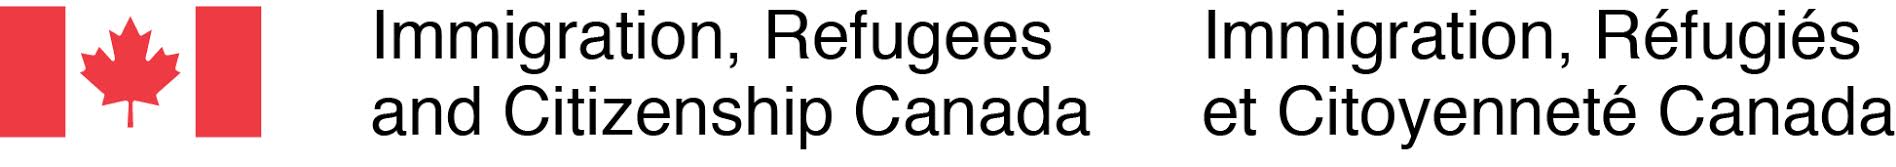 Immigration, Refugees and Citizenship Canada_logo